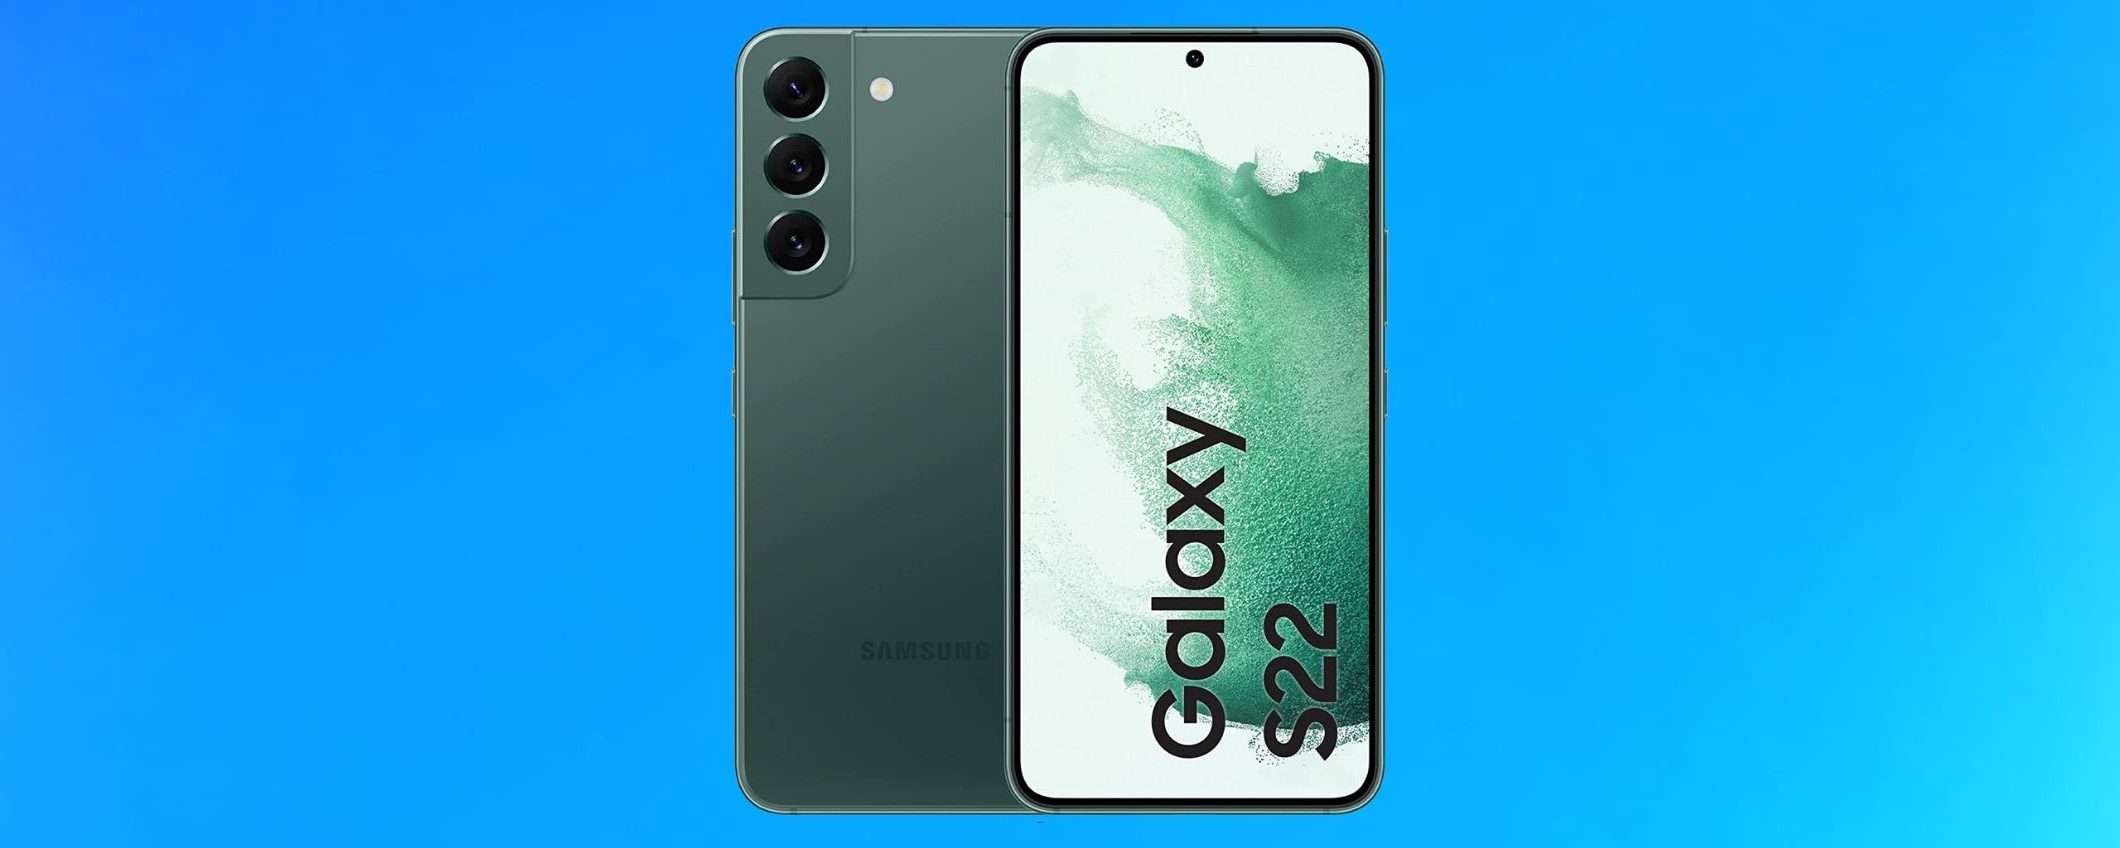 Samsung Galaxy S22 256GB: offerta mai vista prima su Amazon